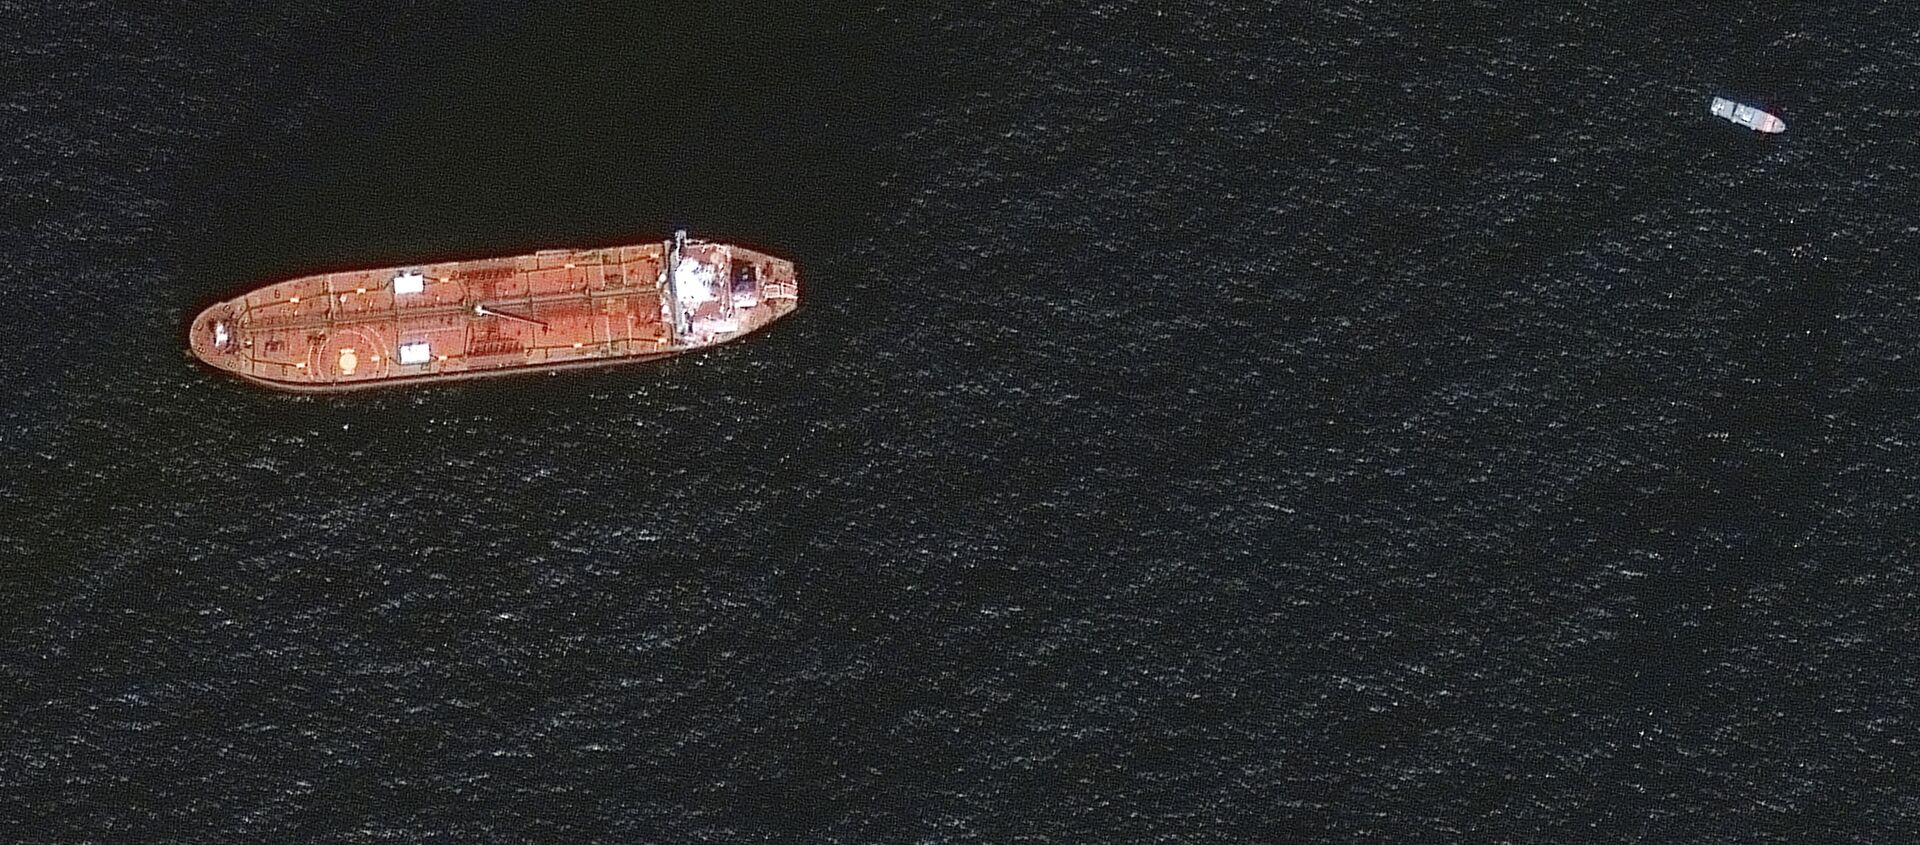 A satellite image shows the damaged Mercer Street Tanker moored off the coast of Fujairah, United Arab Emirates, August 4, 2021 - Sputnik International, 1920, 09.08.2021